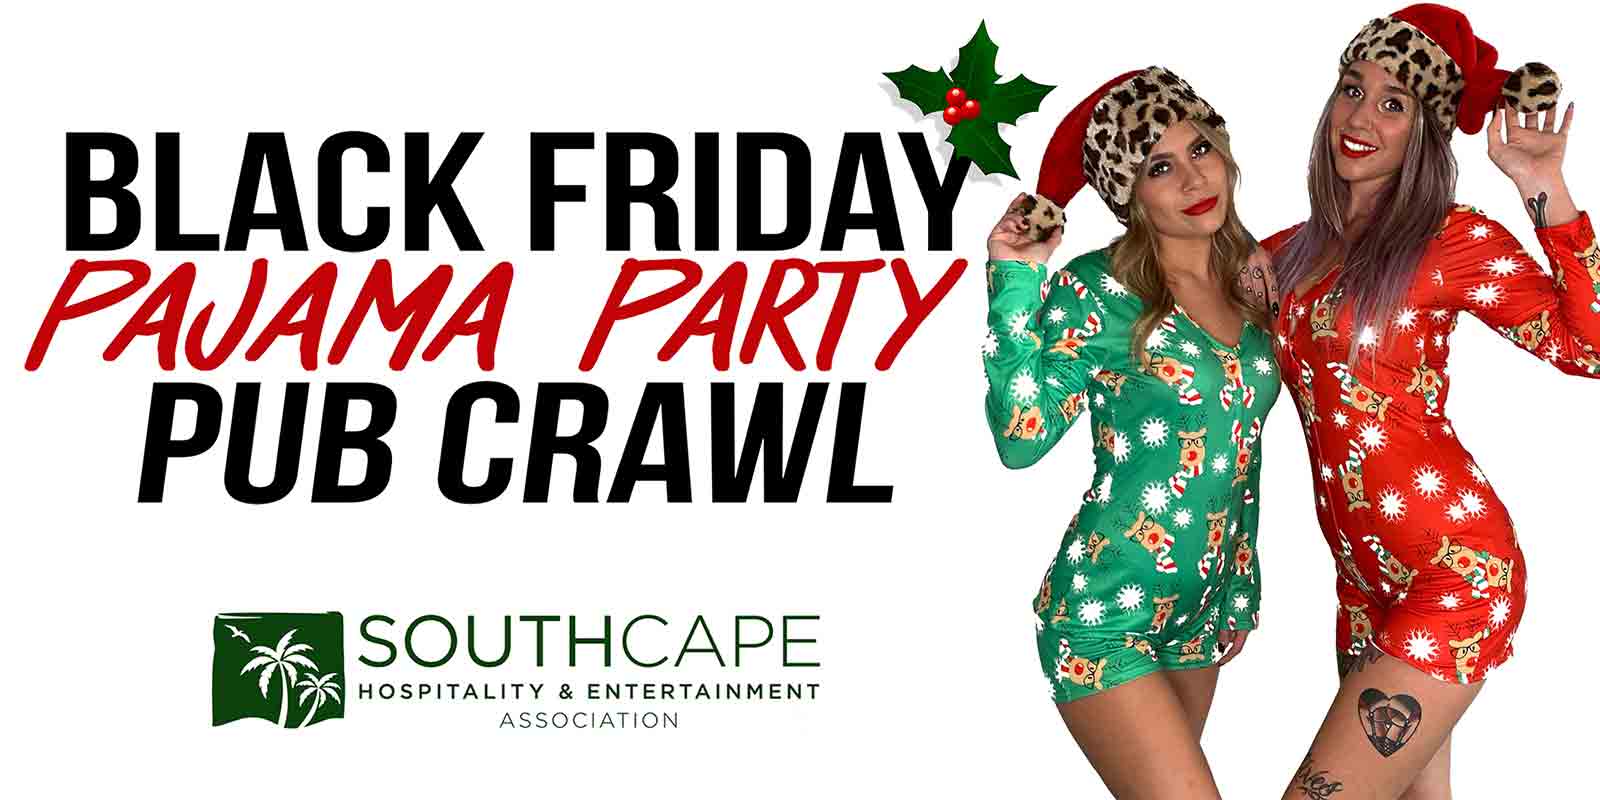 Two young women wearing holiday pajamas - Black Friday Pajama Party Pub Crawl